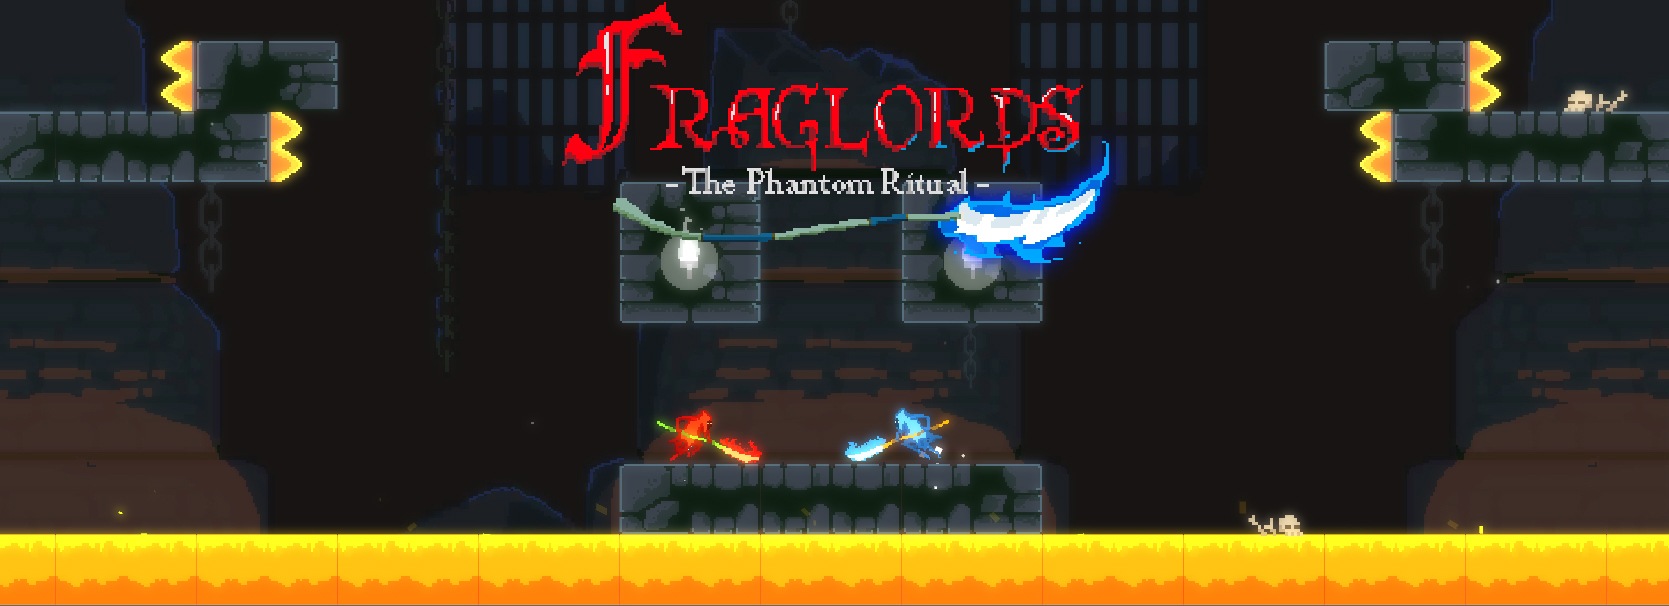 Fraglords: The Phantom Ritual